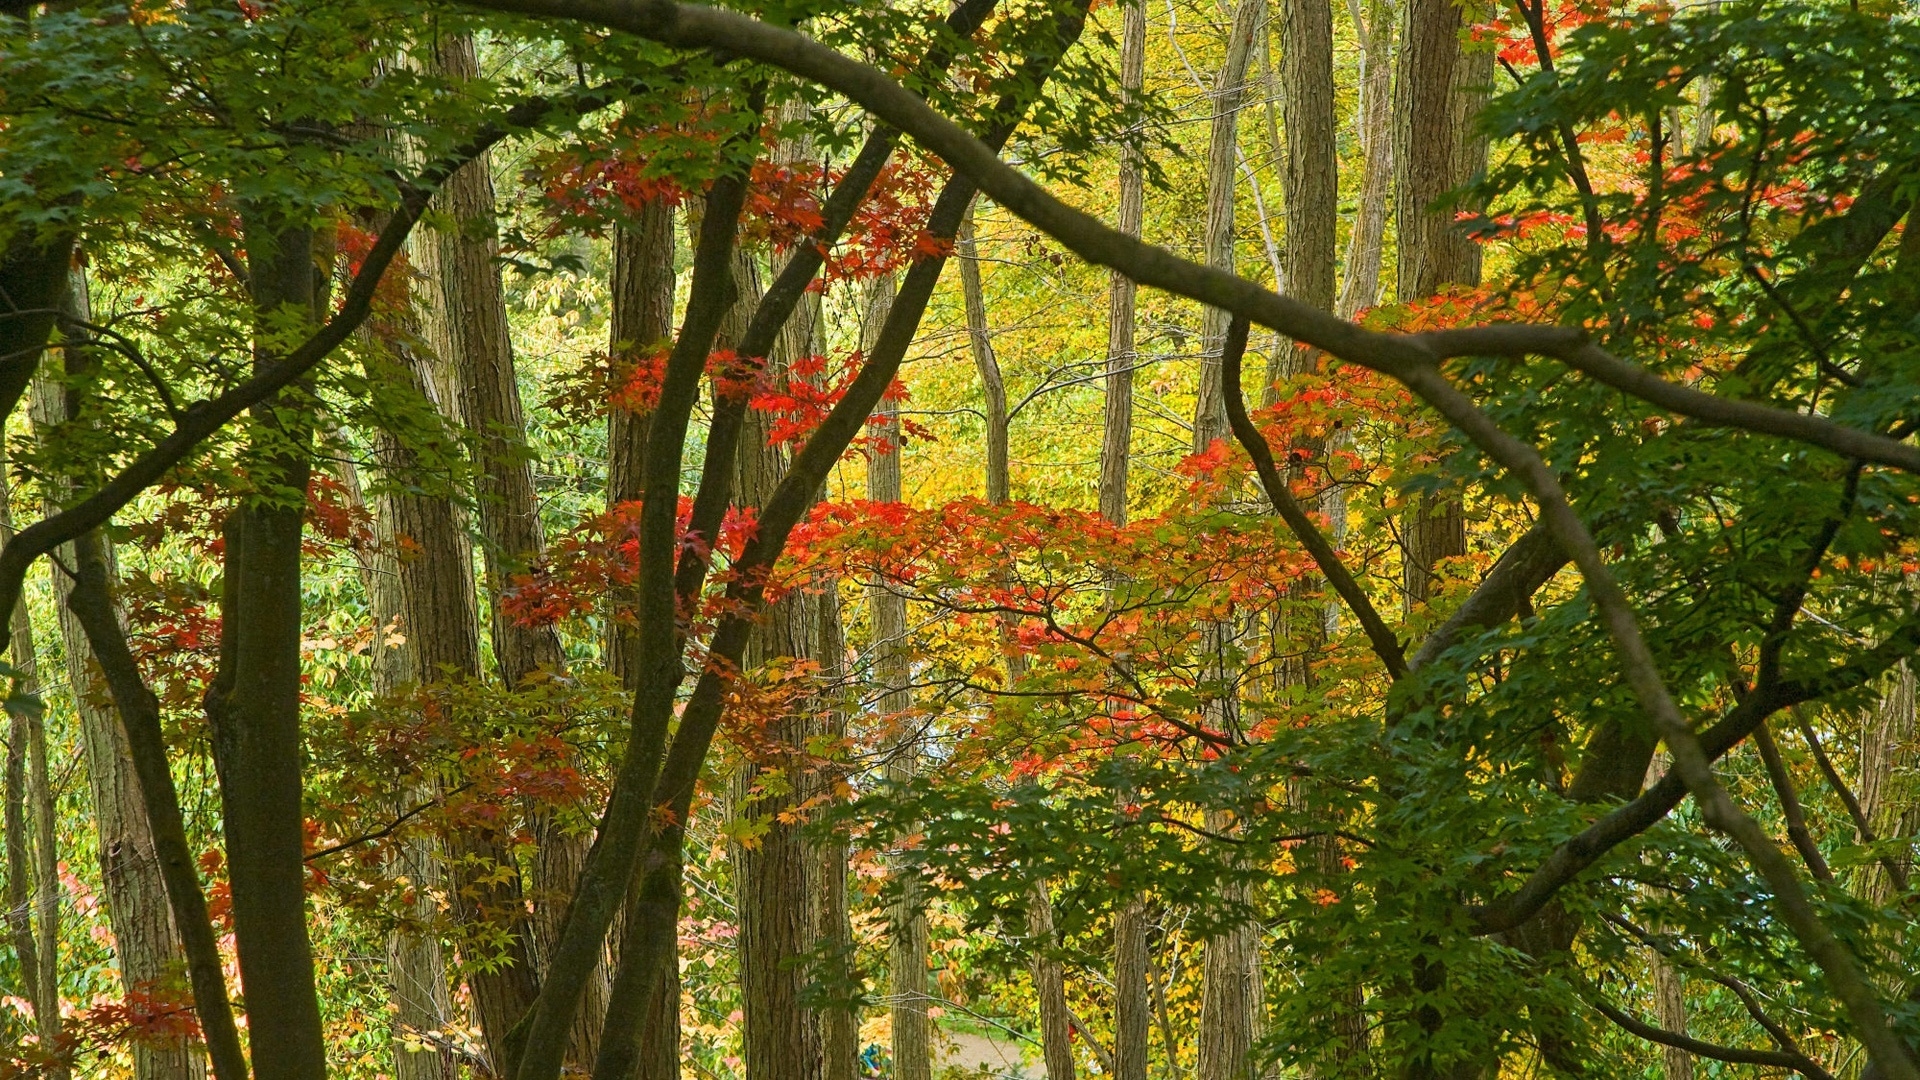 Few Autumn Trees for 1920 x 1080 HDTV 1080p resolution